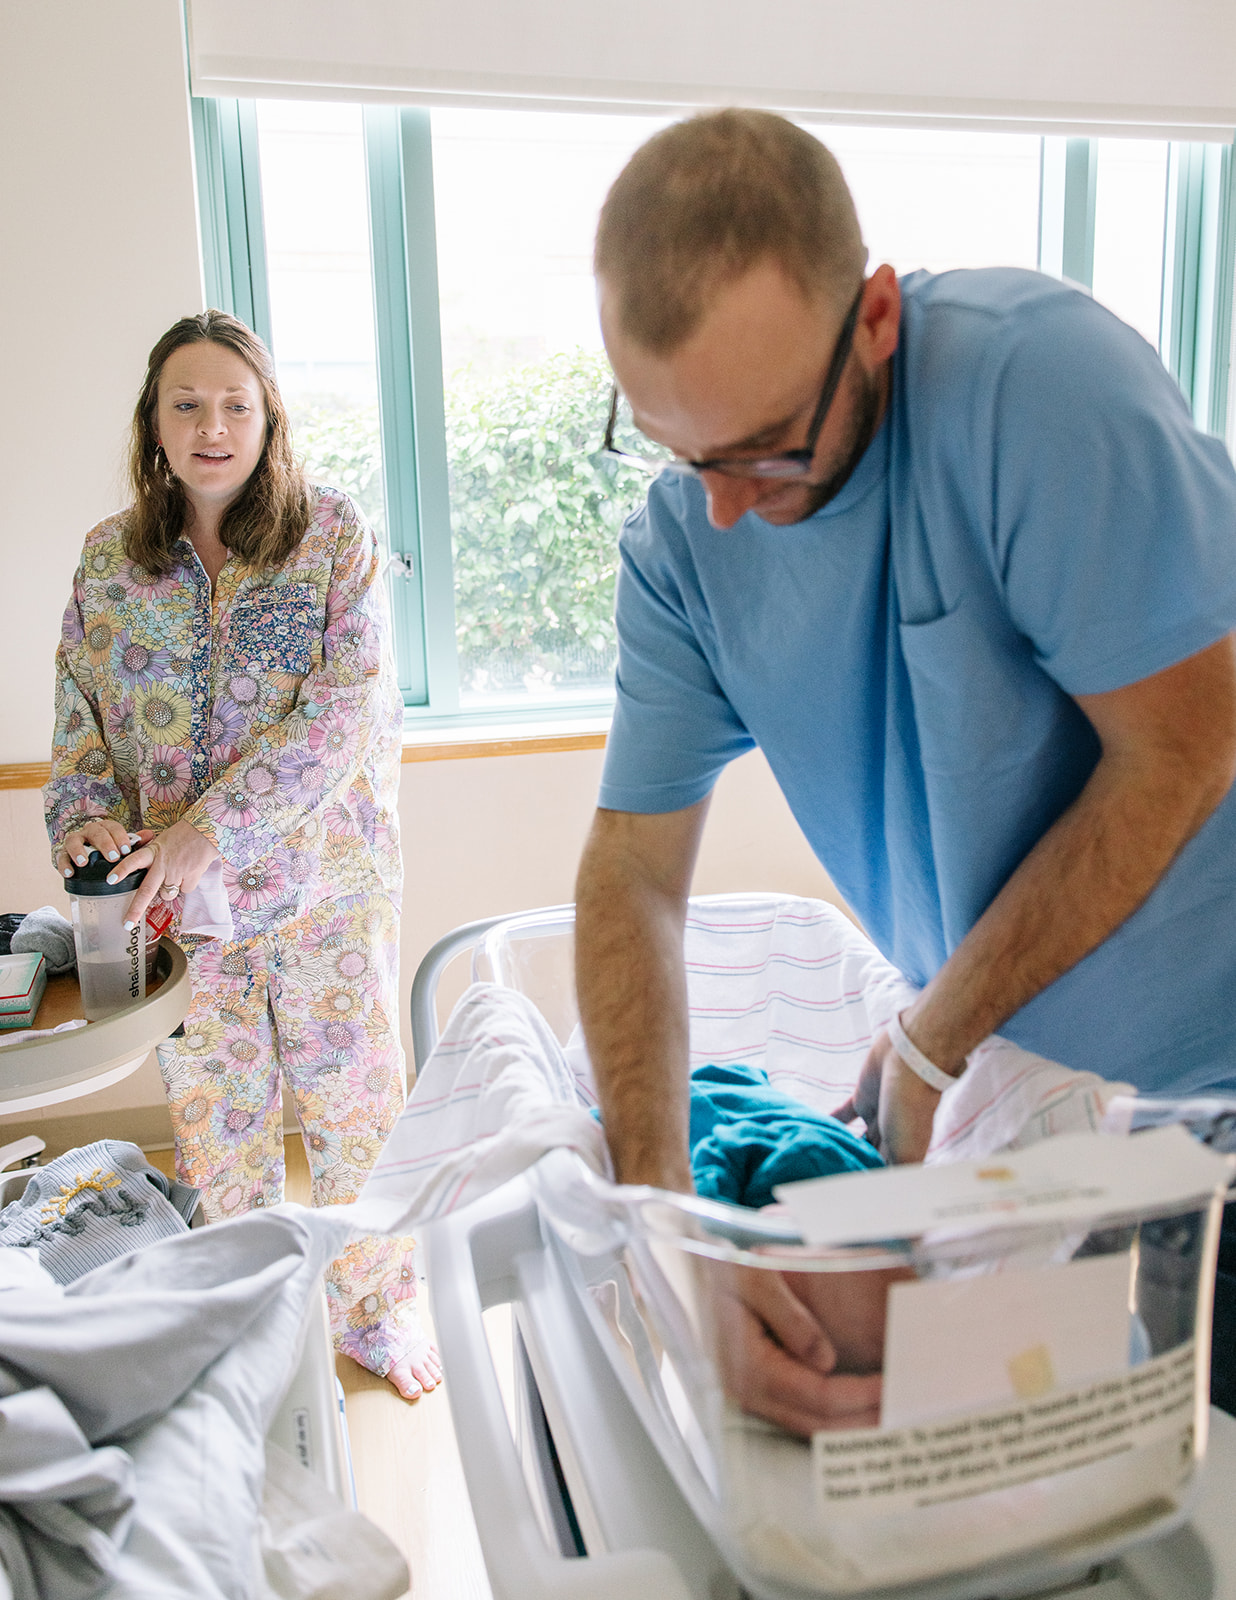 dad swaddling newborn baby boy in hospital while mom looks on